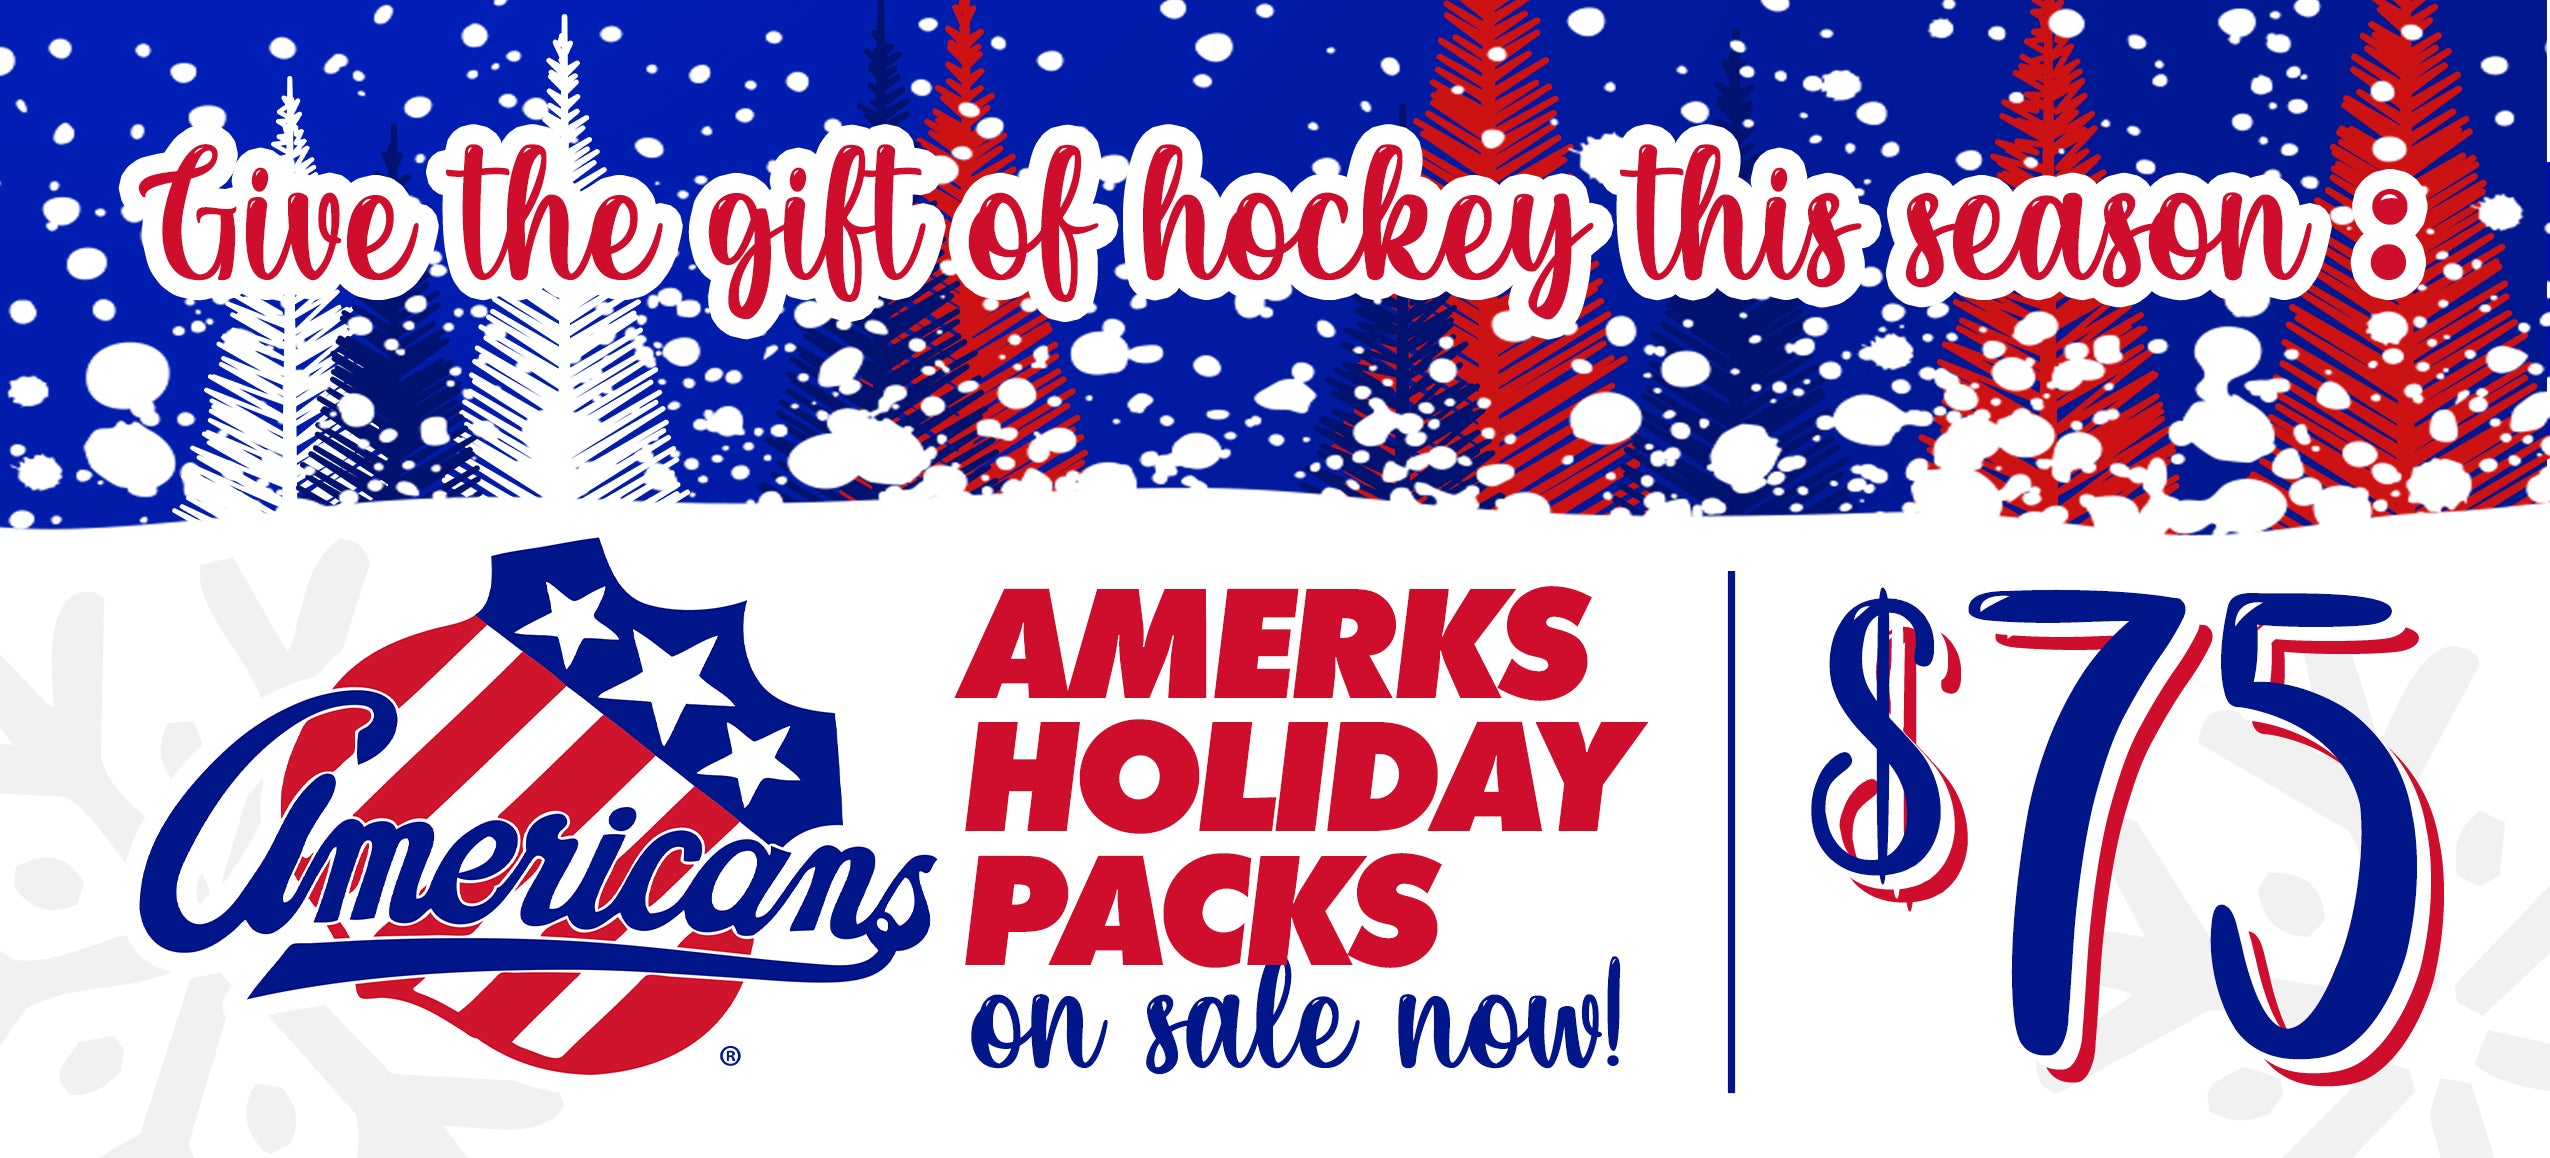 Amerks Holiday Packs Web Lead.jpg